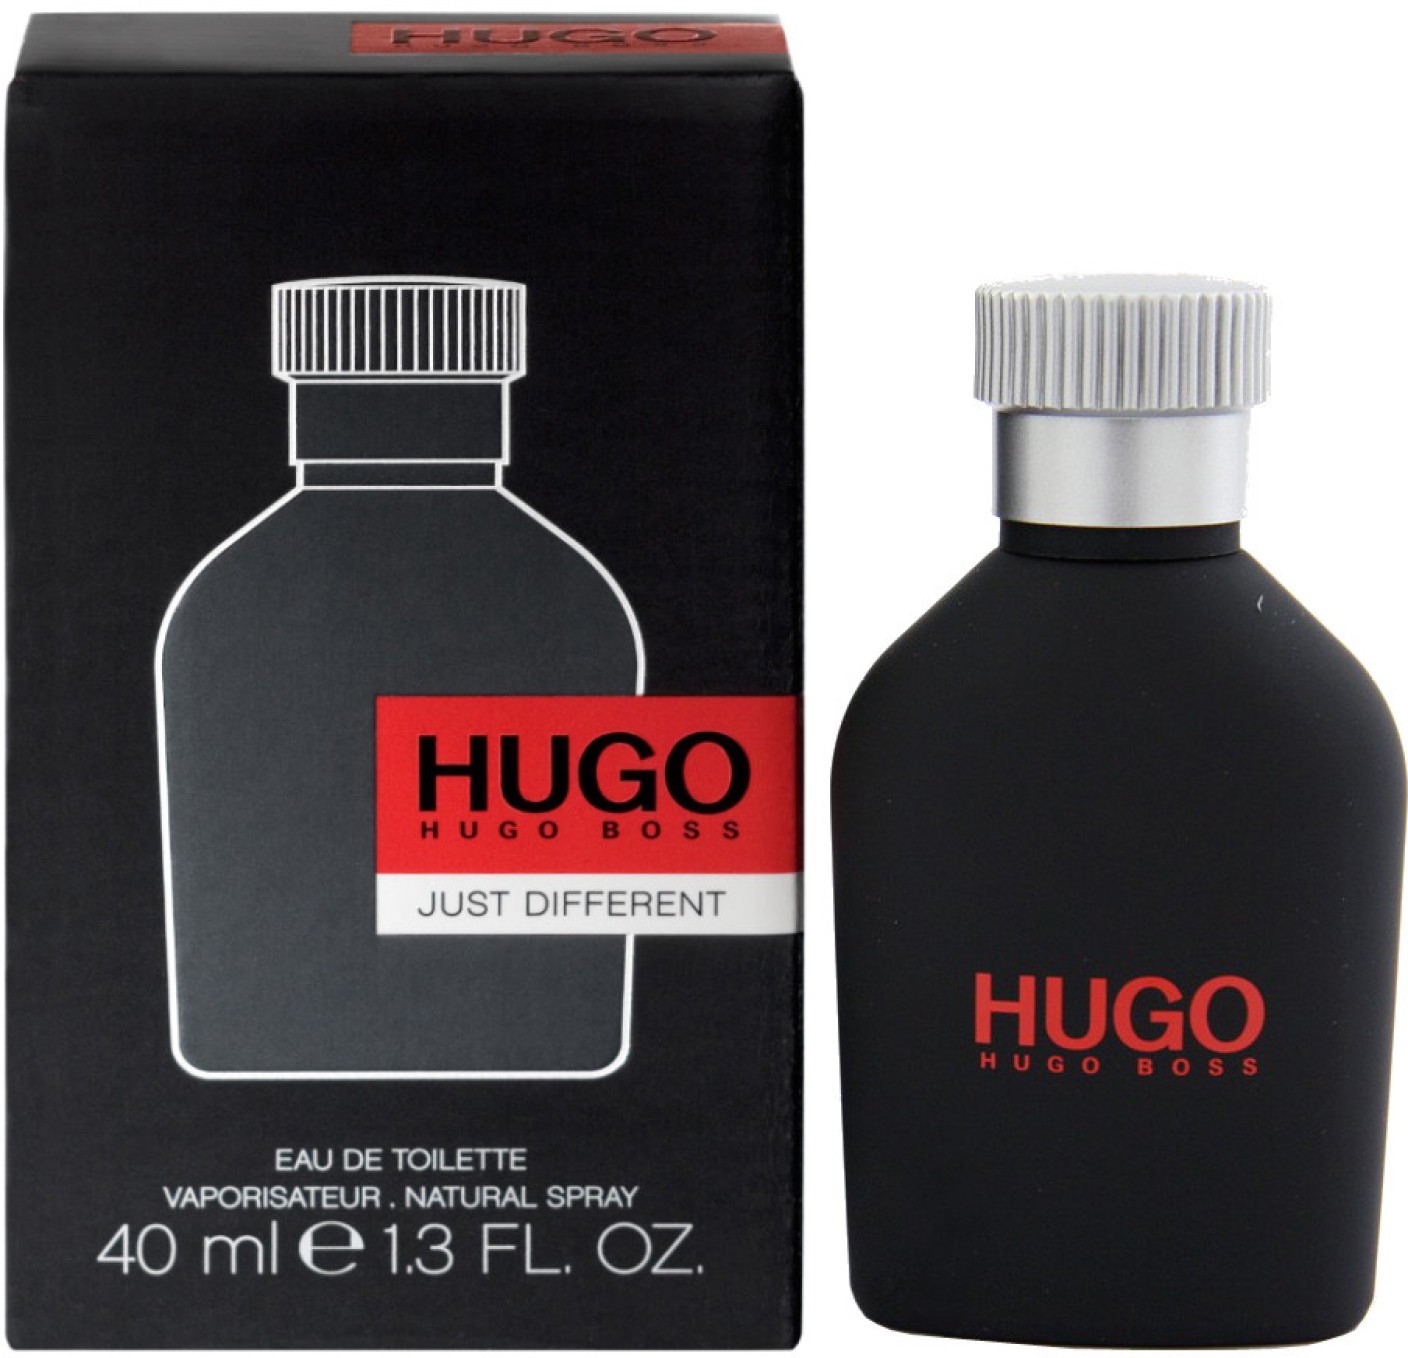 Hugo different. Hugo Boss just different EDT 40 ml. Hugo Boss just different 75мл. Hugo Boss Hugo just different [m] EDT - 125ml. Hugo Boss Hugo man туалетная вода 100 мл.